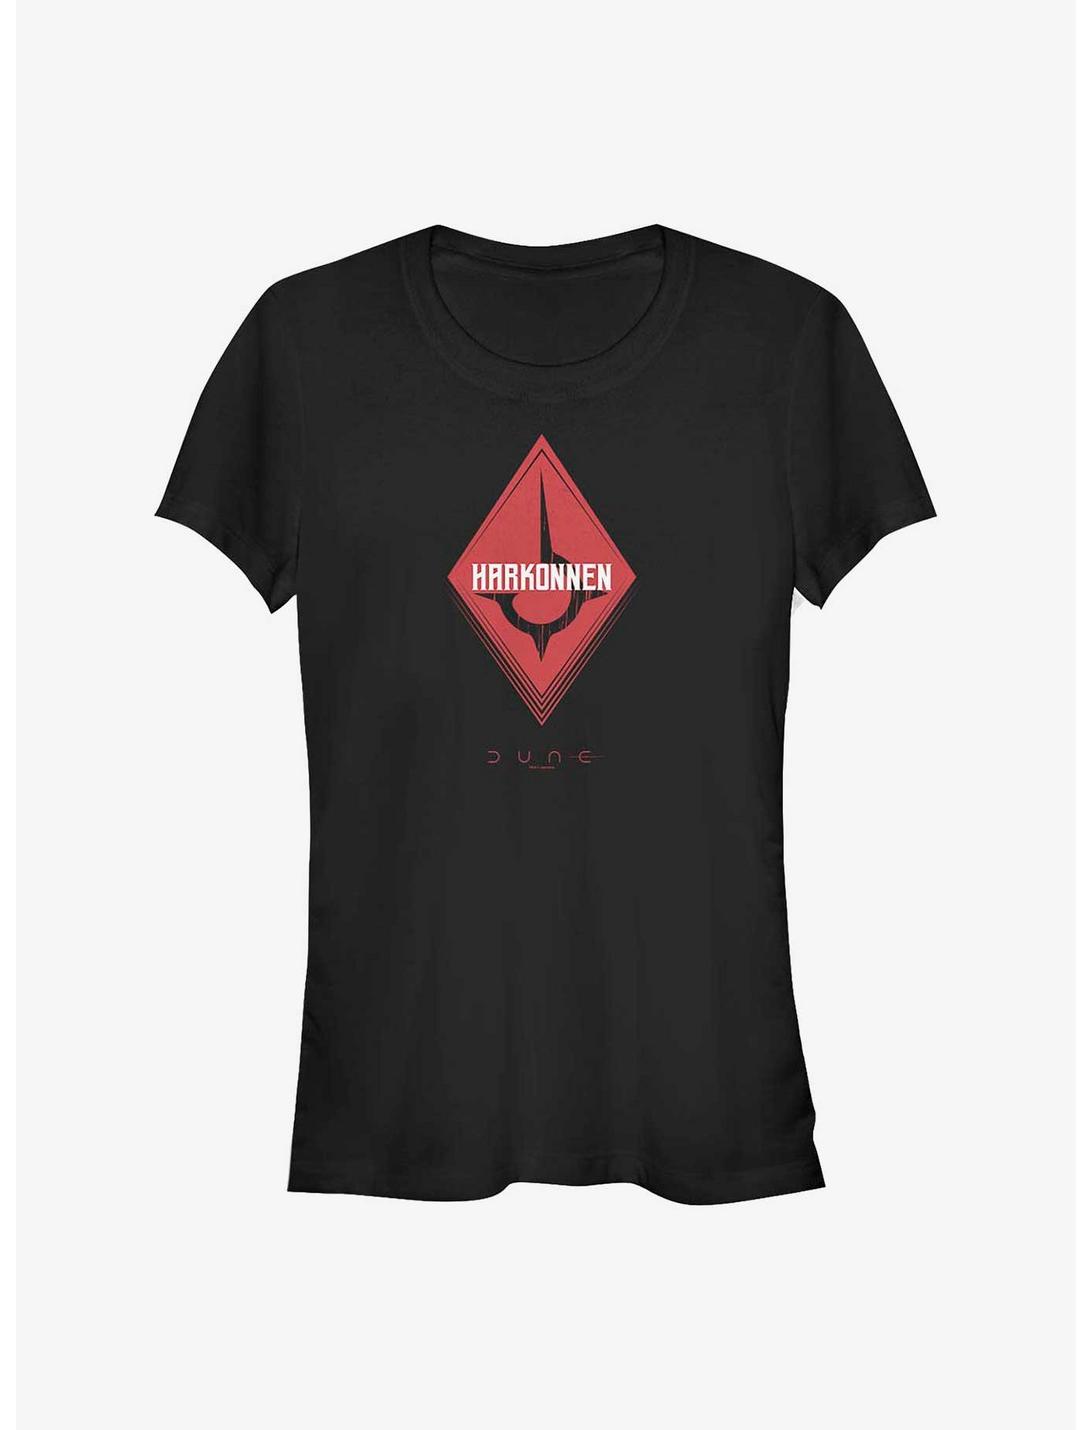 Dune Harkonnen Red Logo Girls T-Shirt, BLACK, hi-res